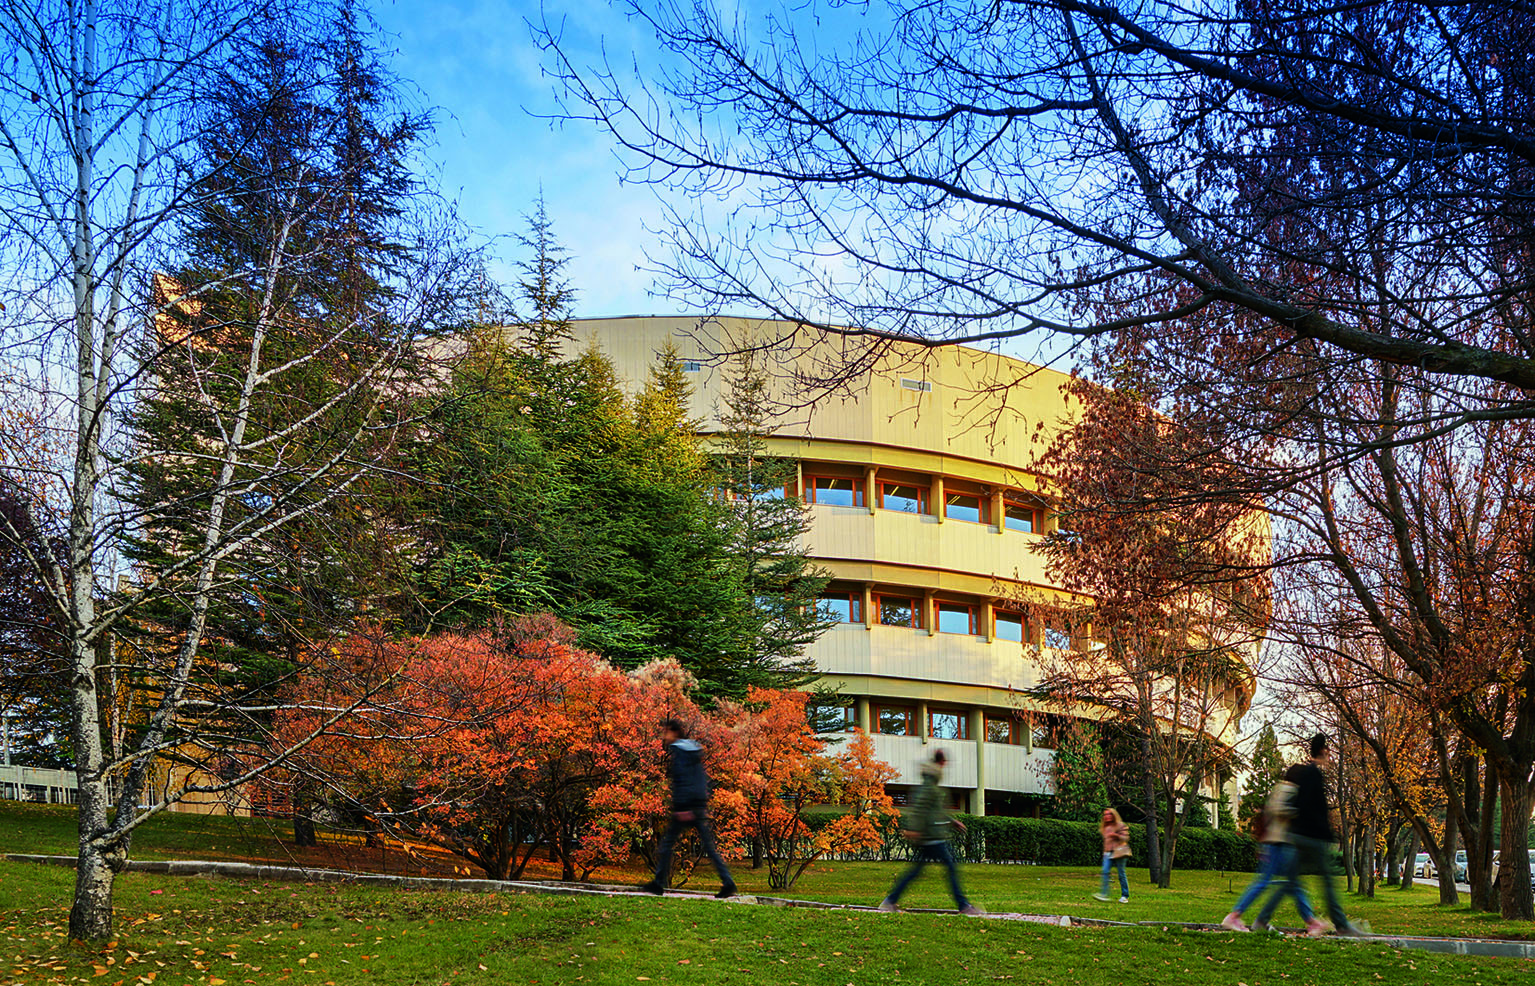 Bilkent university